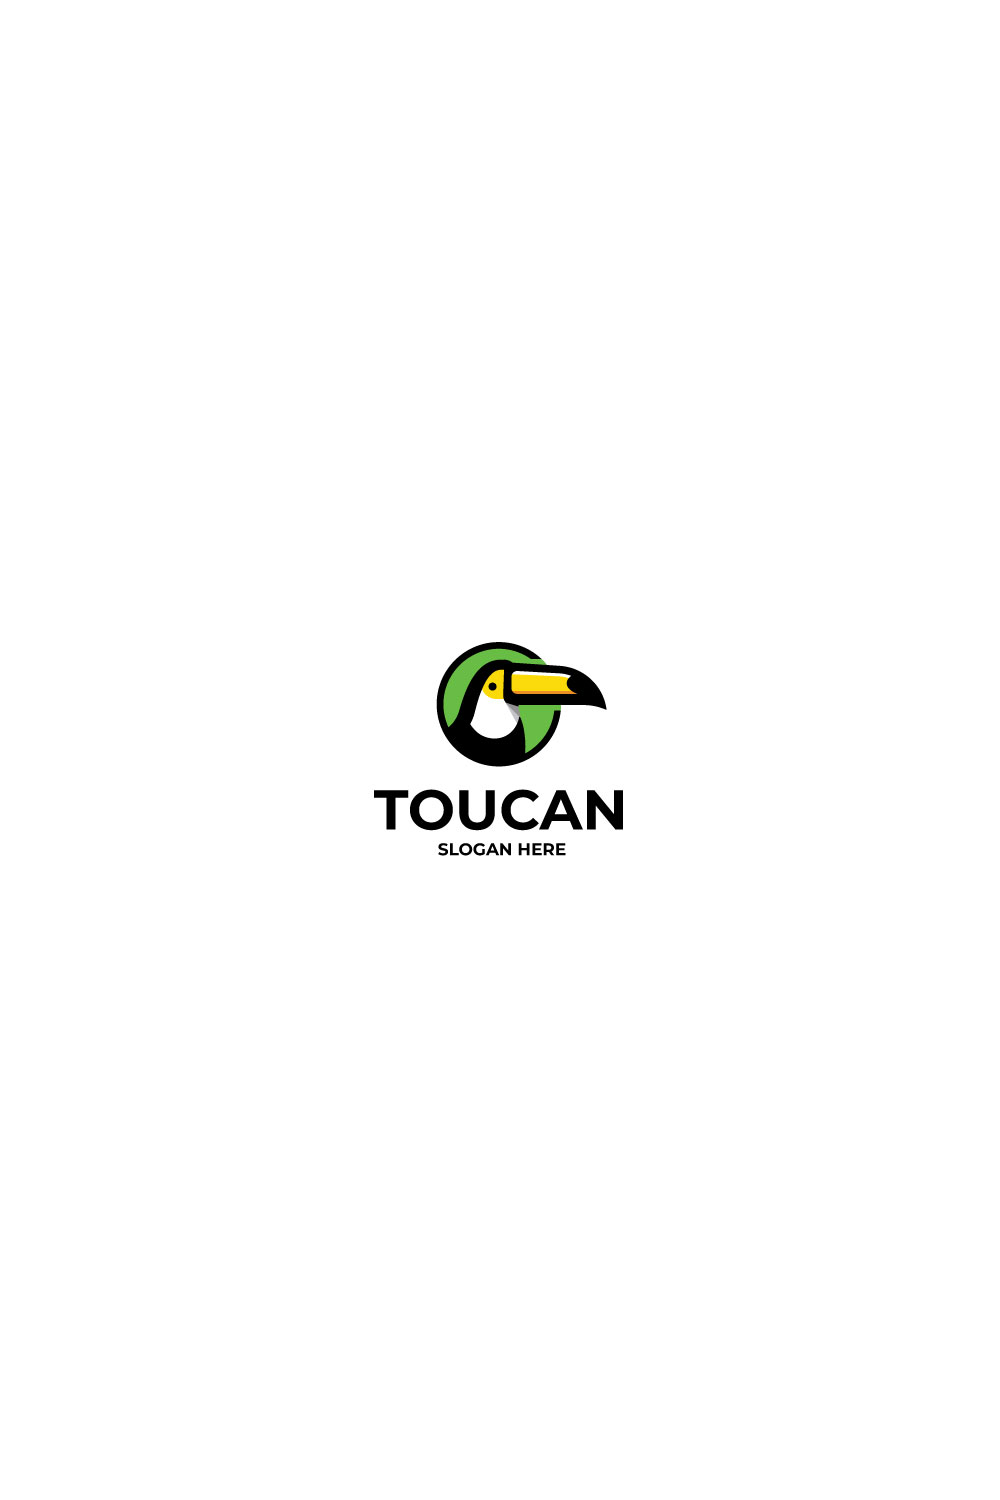 Toucan Logo pinterest preview image.